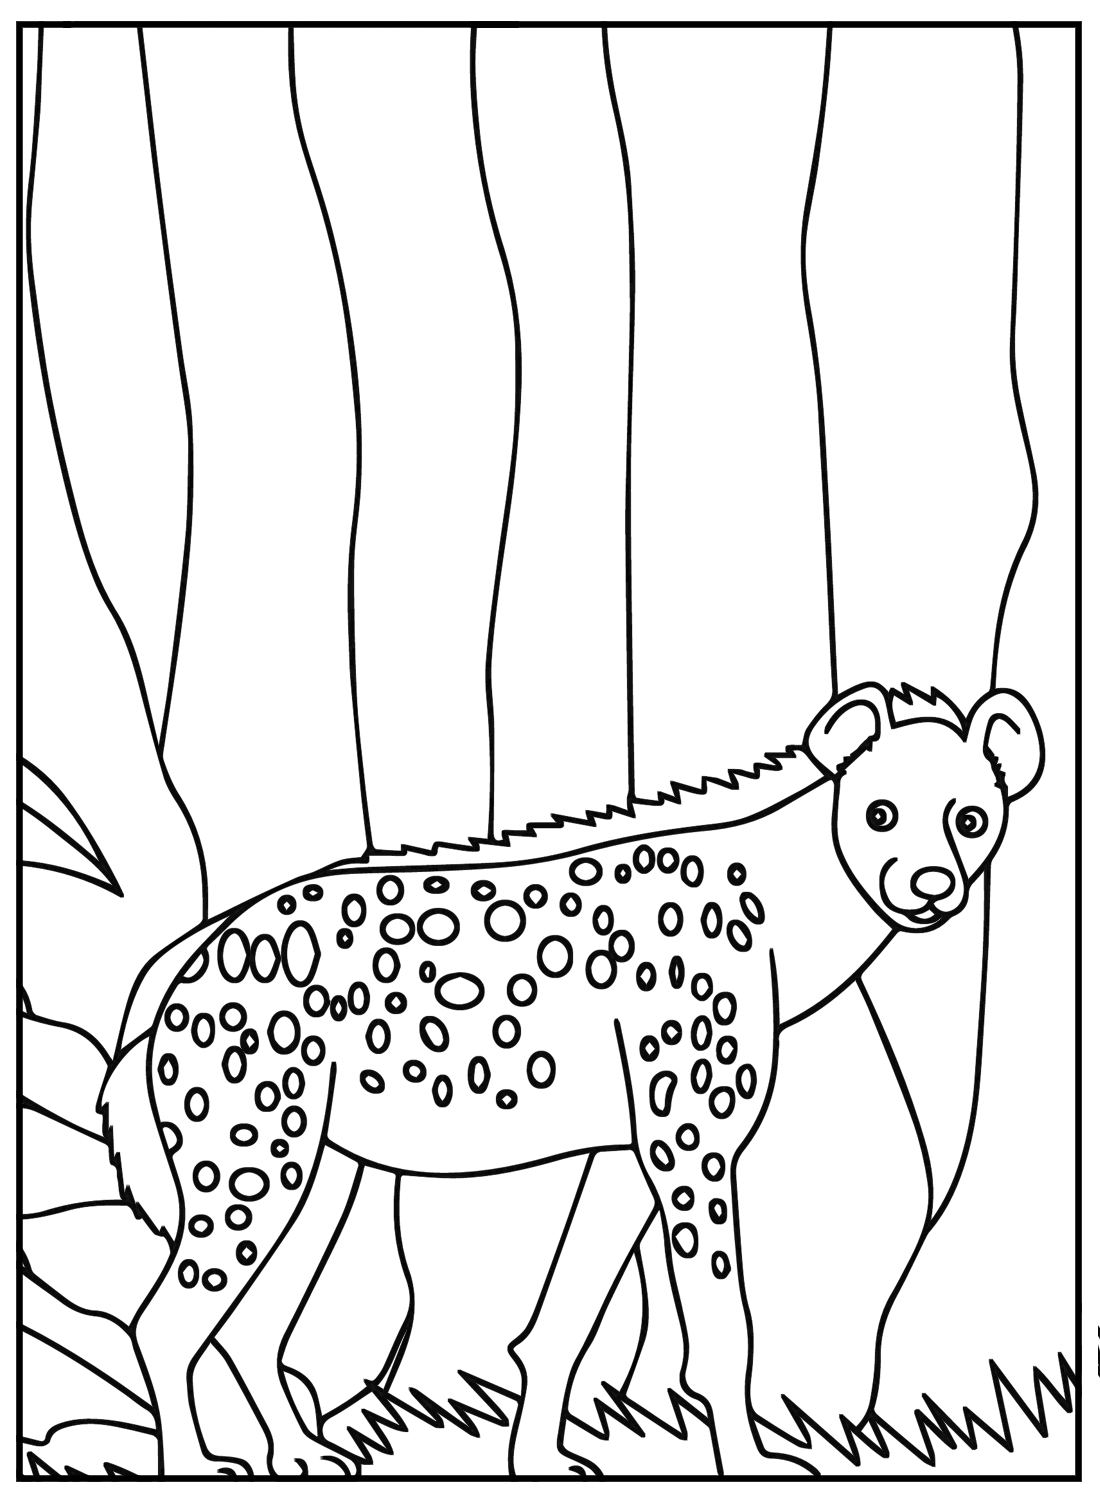 Hyena Image Coloring Page